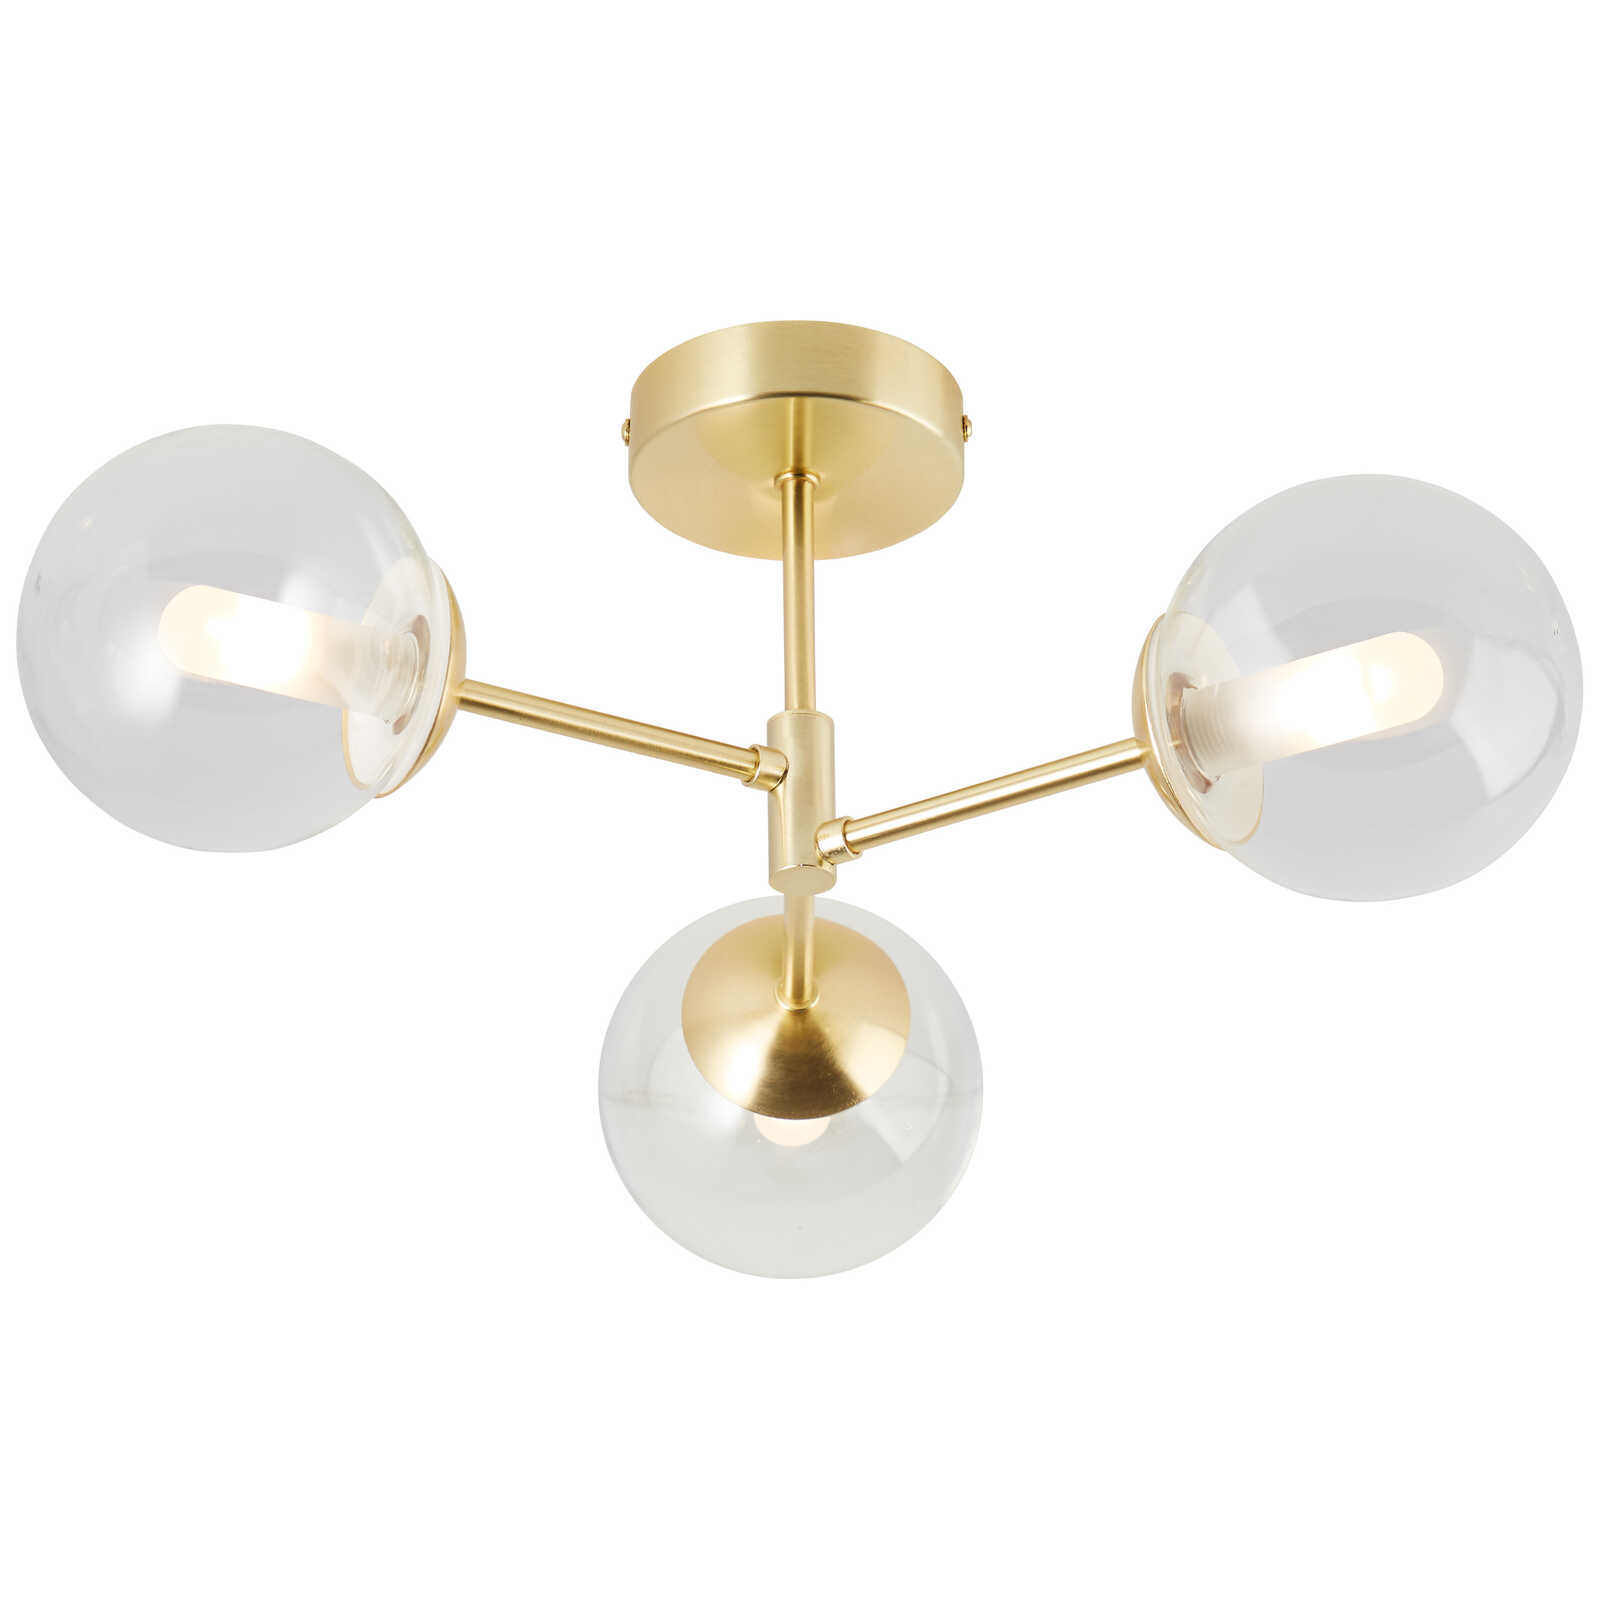             Glazen plafondlamp - Henri 1 - Goud
        